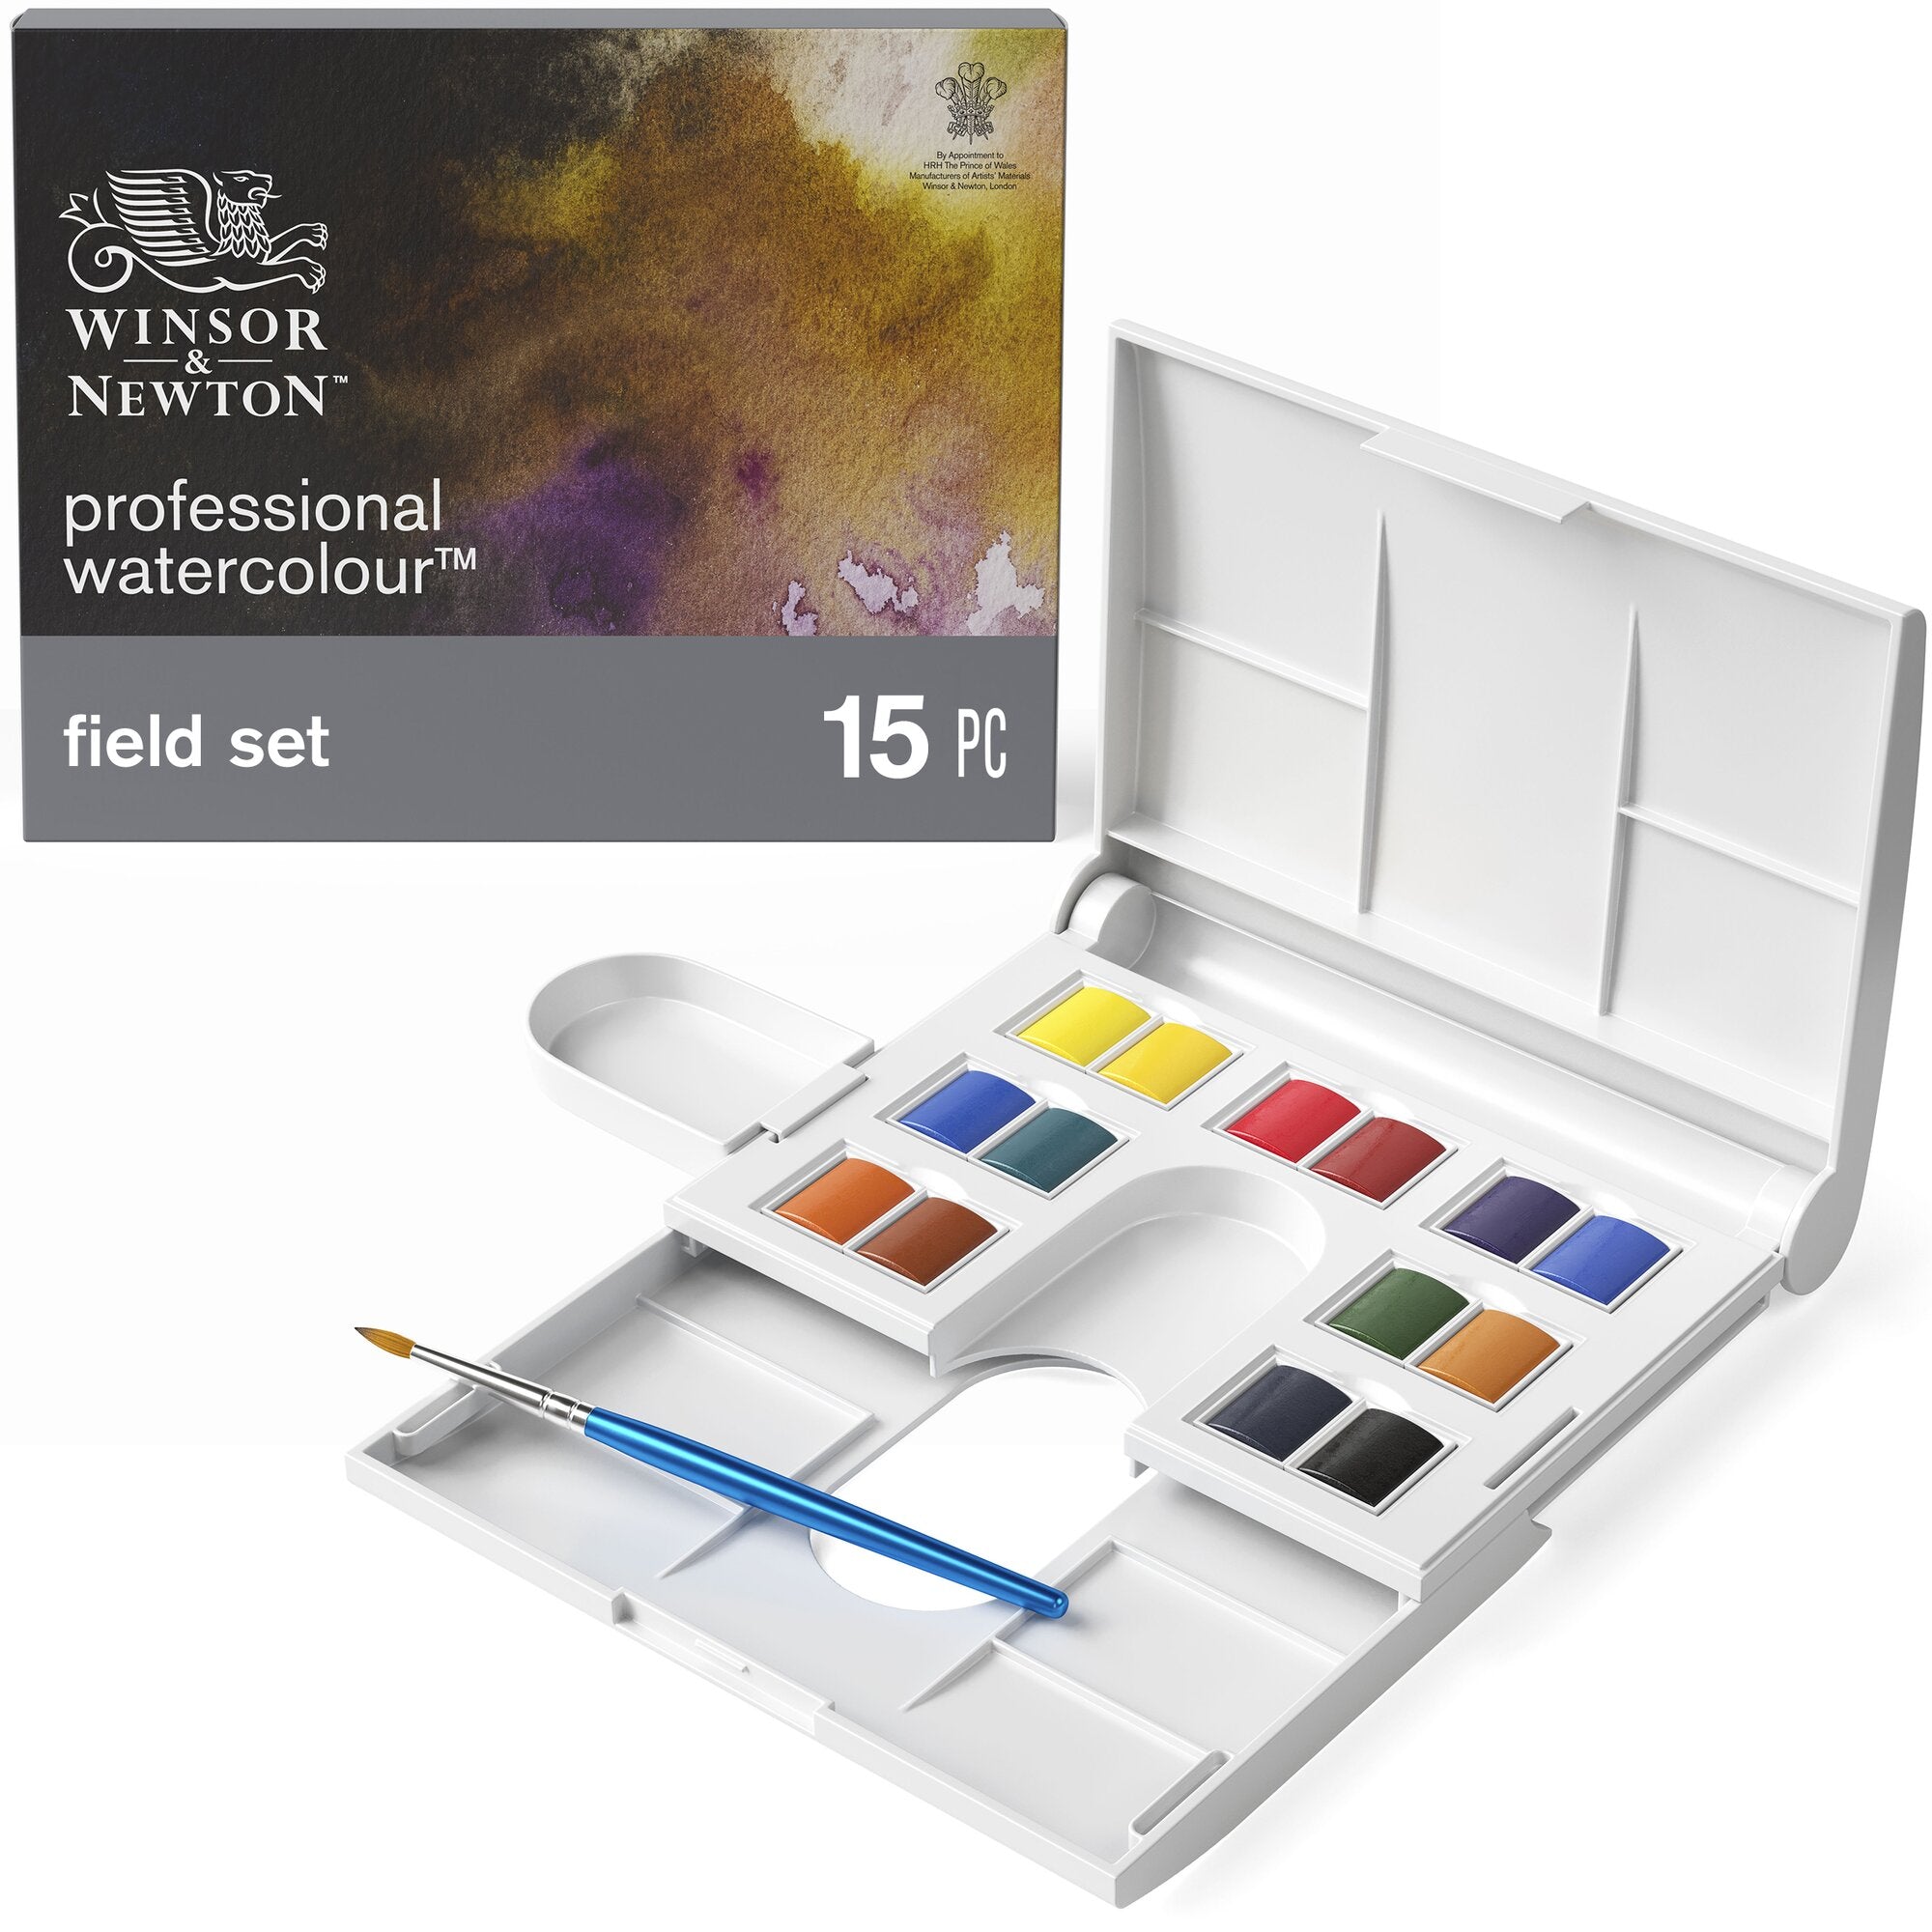 Winsor & Newton Studio Collection Watercolour Pencils Set of 24